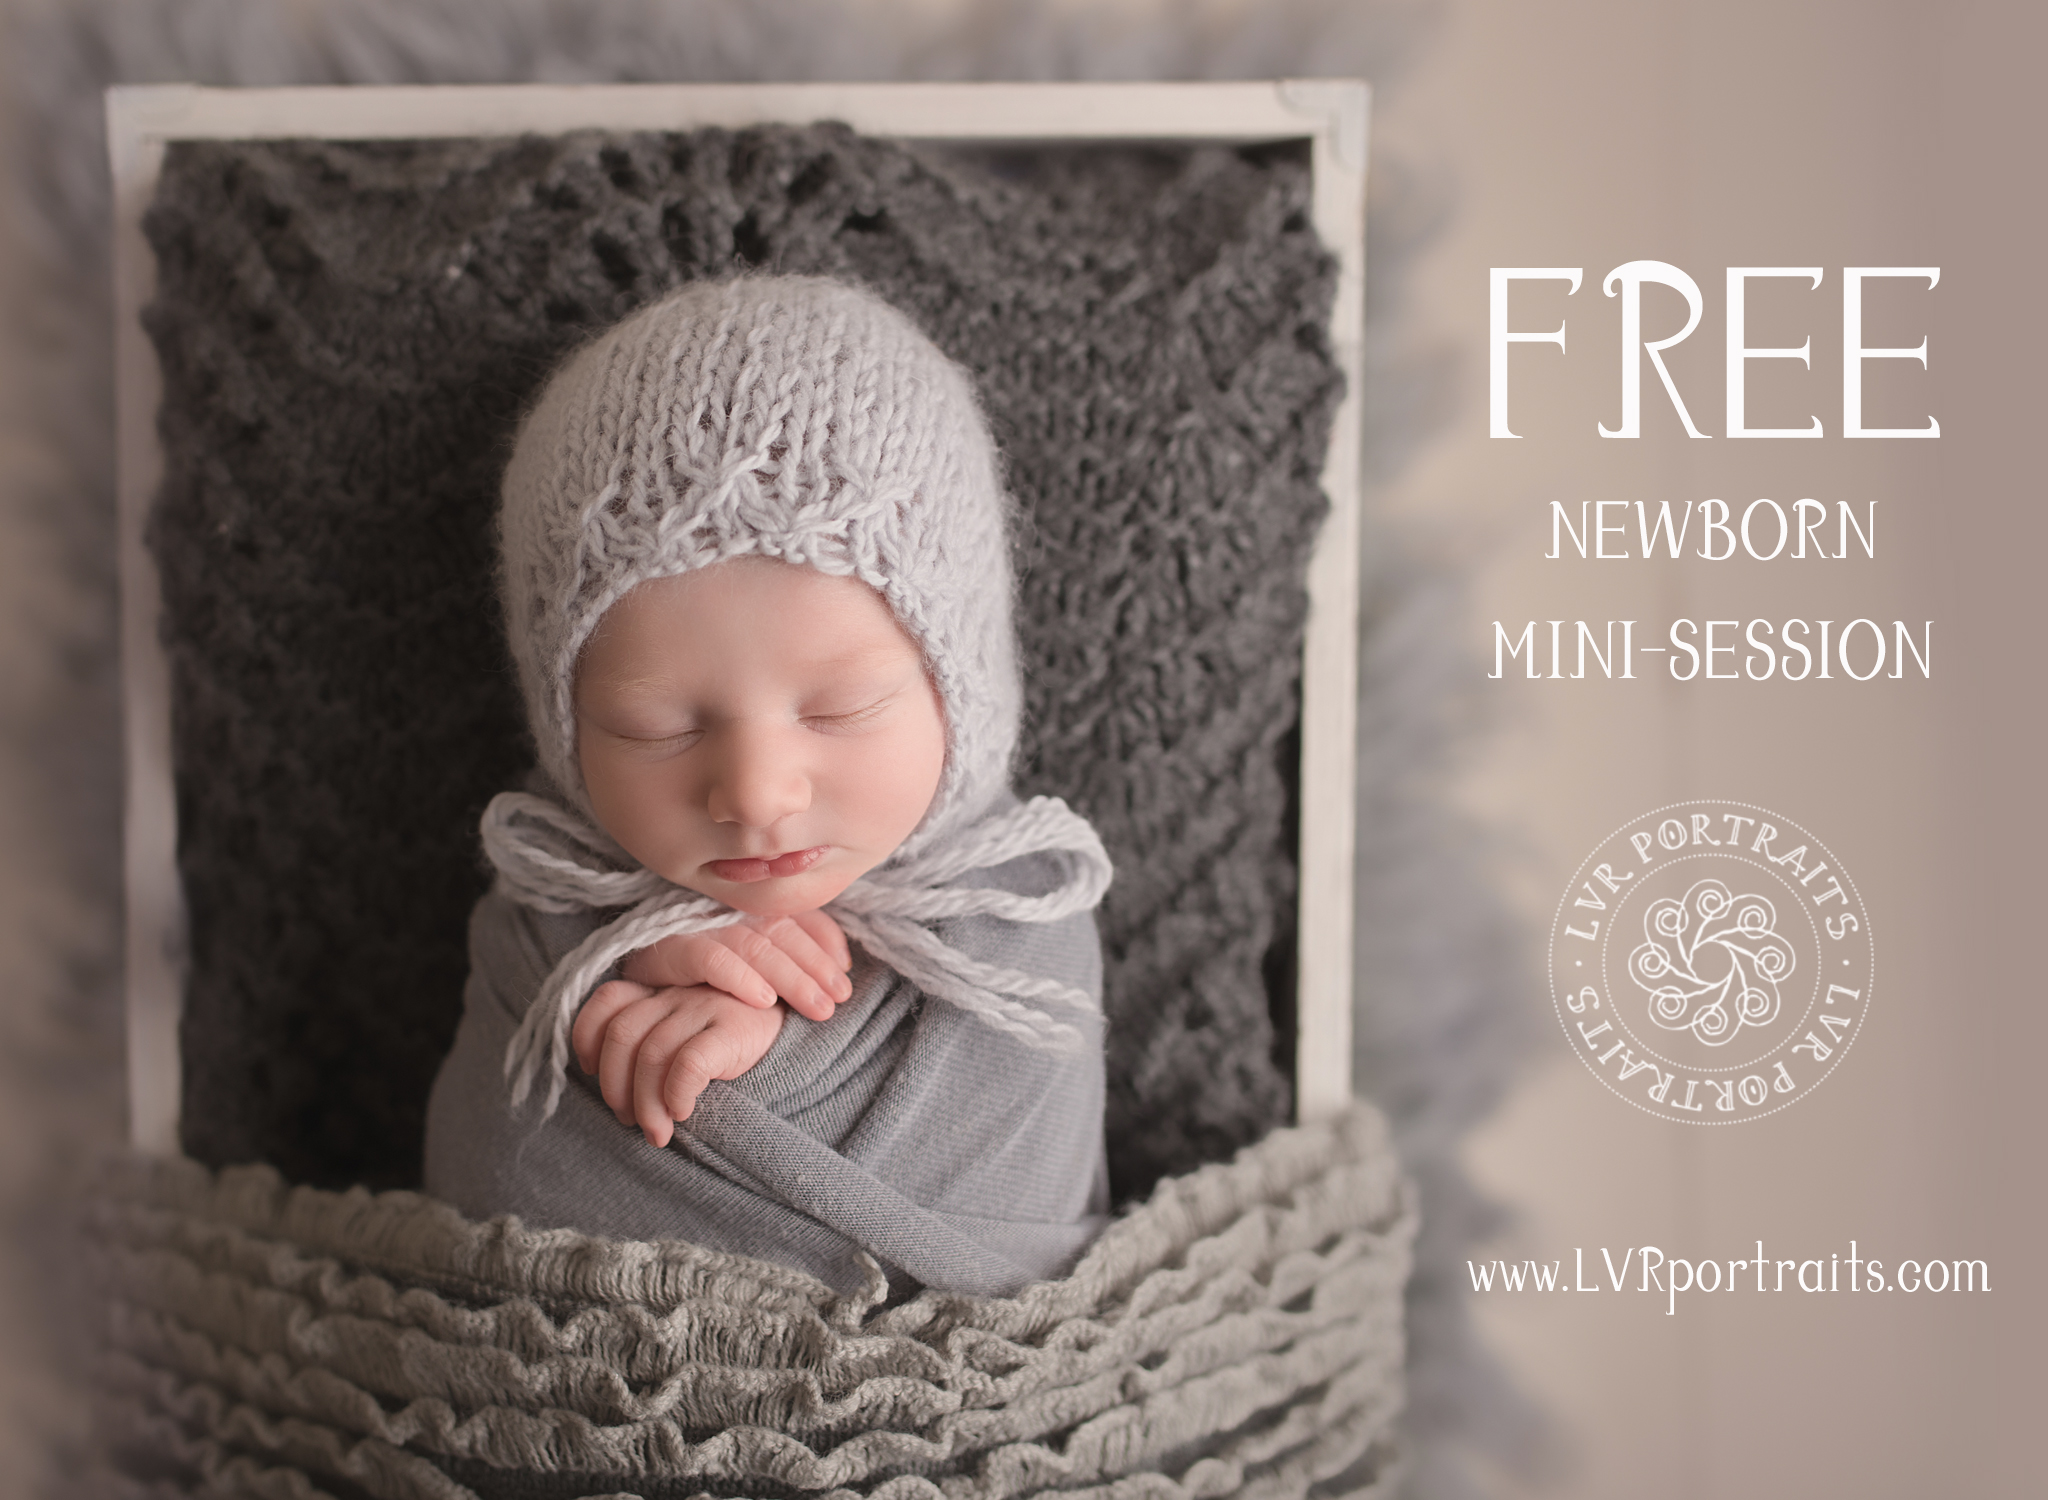 Free newborn mini session, LVR Portraits, Lancaster baby shower event